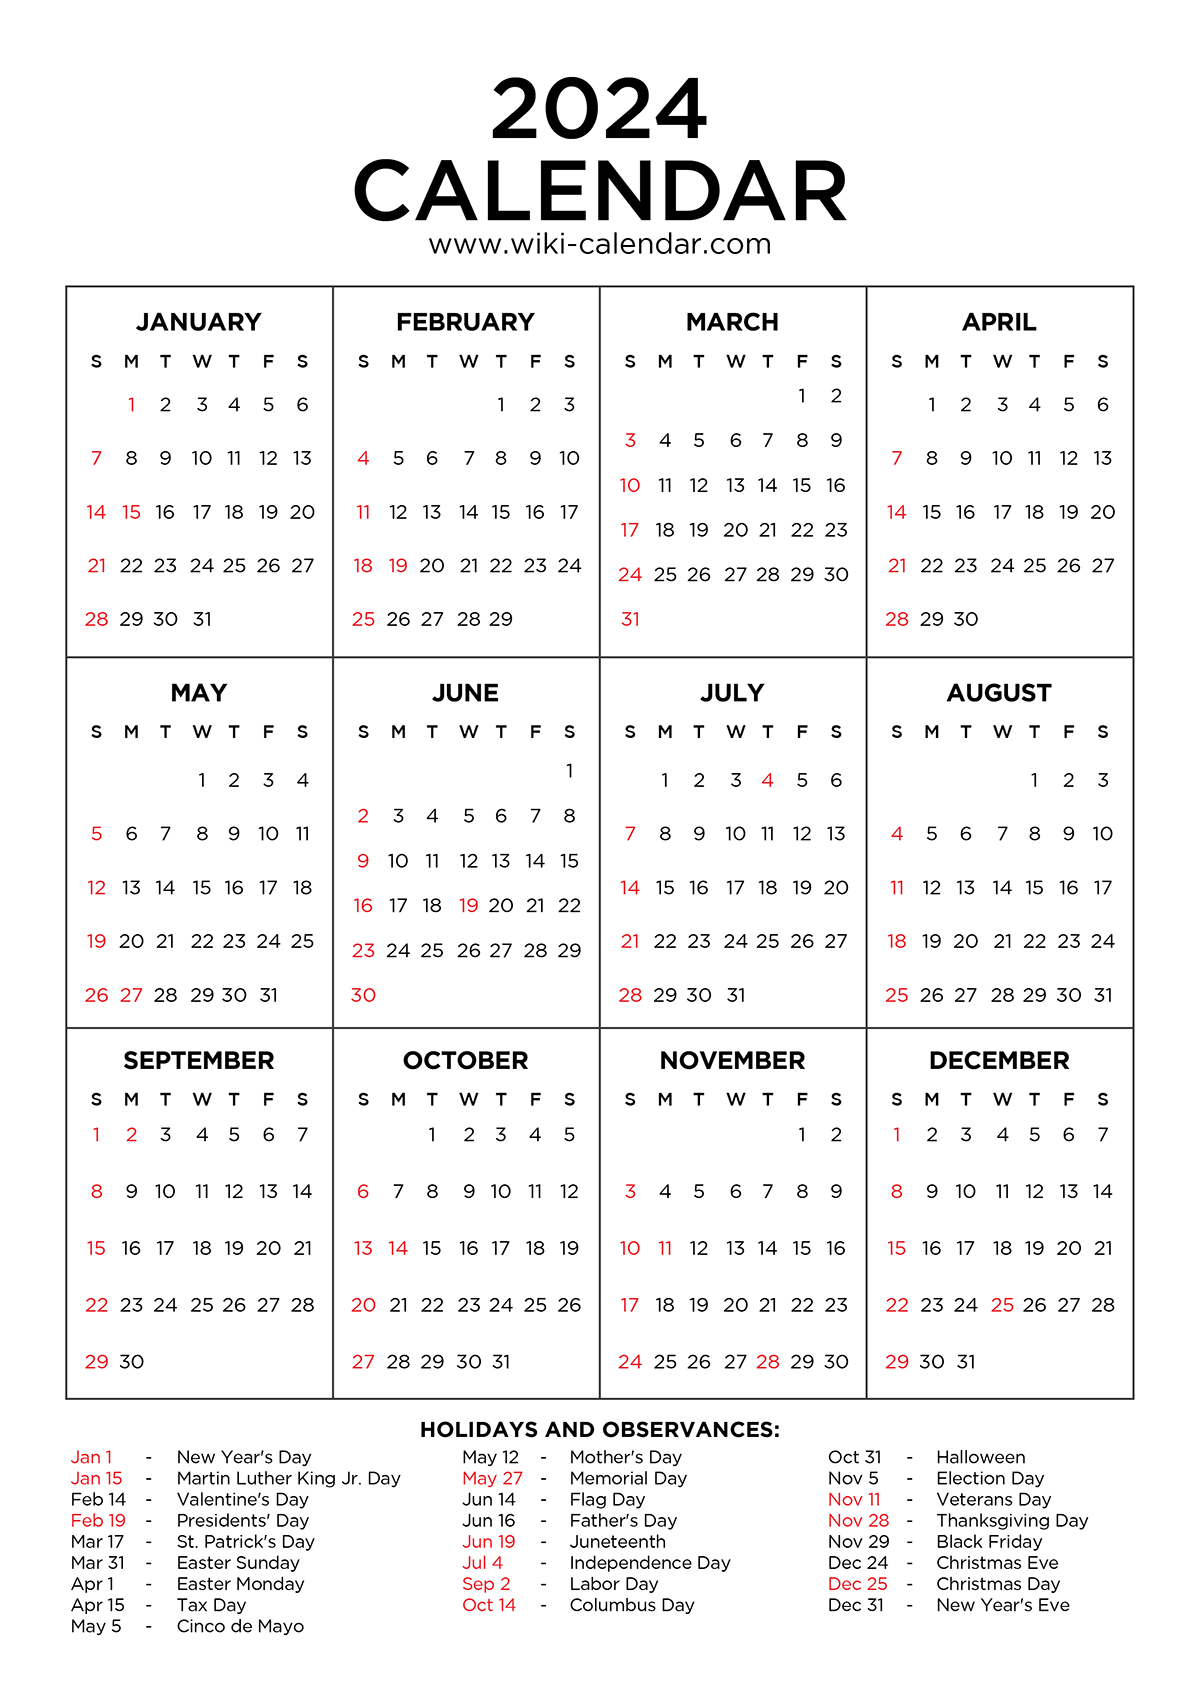 Year 2024 Calendar Printable With Holidays - Wiki Calendar within Free Printable Calendar 2024 With Holidays Pdf